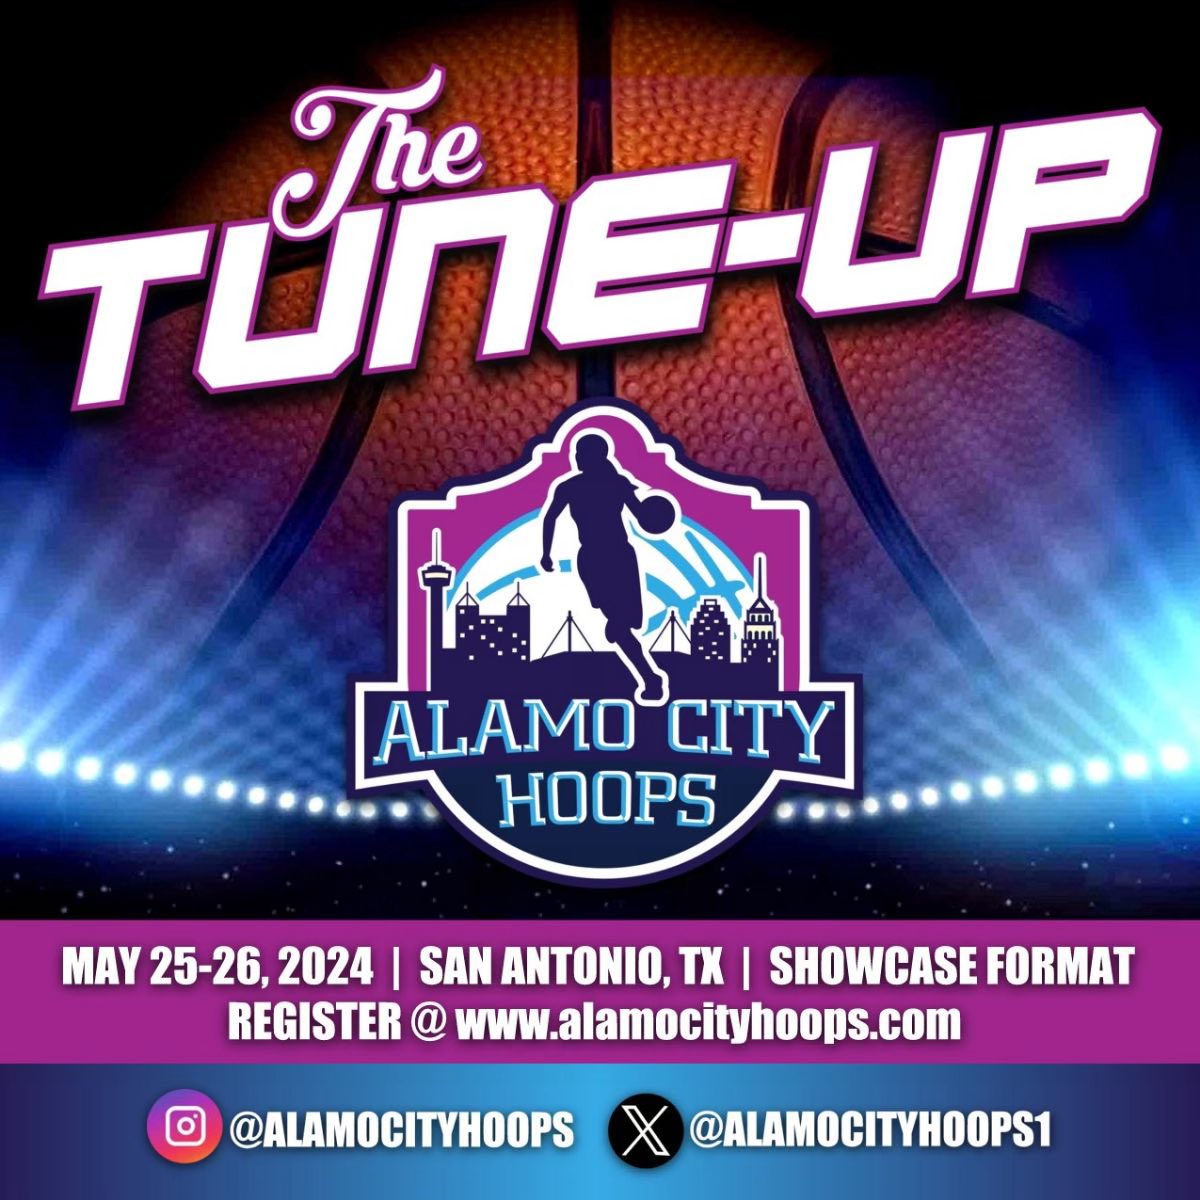 Don’t miss this event! Register ASAP! 
🗓️ May 25-26
📍 San Antonio, TX
💻 alamocityhoops.com 
#txhsgbb #ACHGBB @ACH_GBB